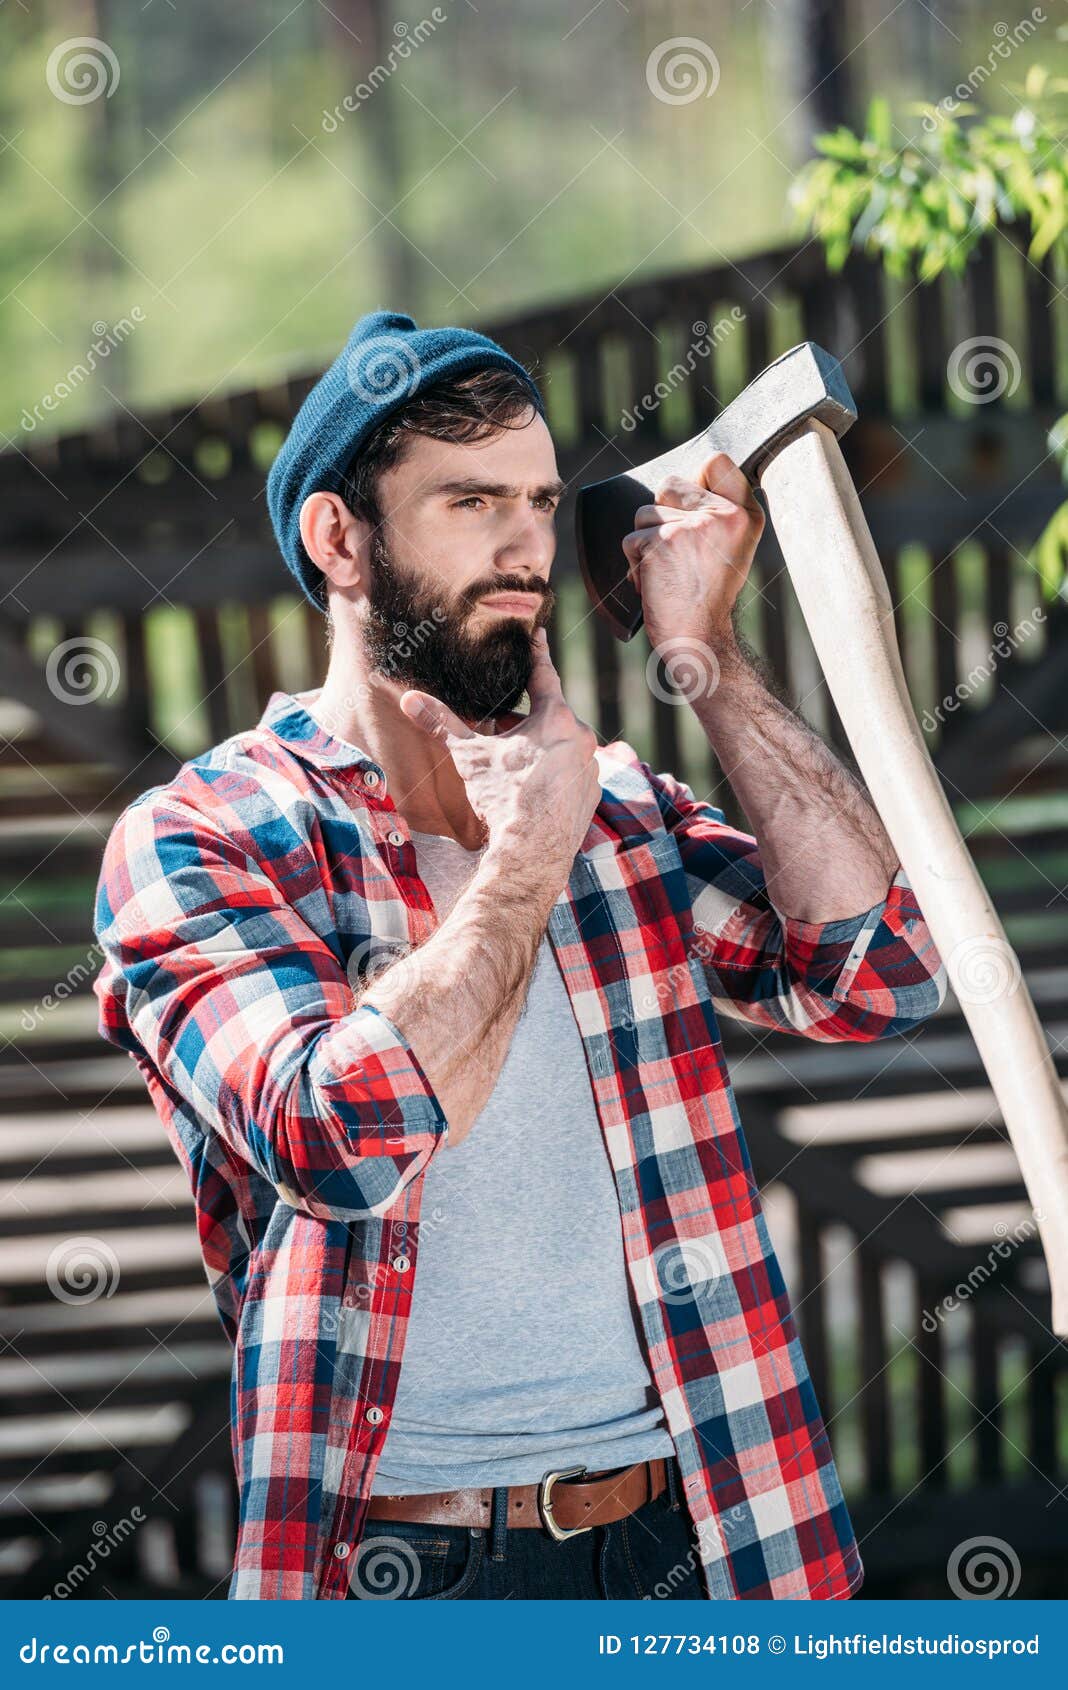 https://thumbs.dreamstime.com/z/lumberjack-checkered-shirt-shaving-beard-axe-sawmill-127734108.jpg